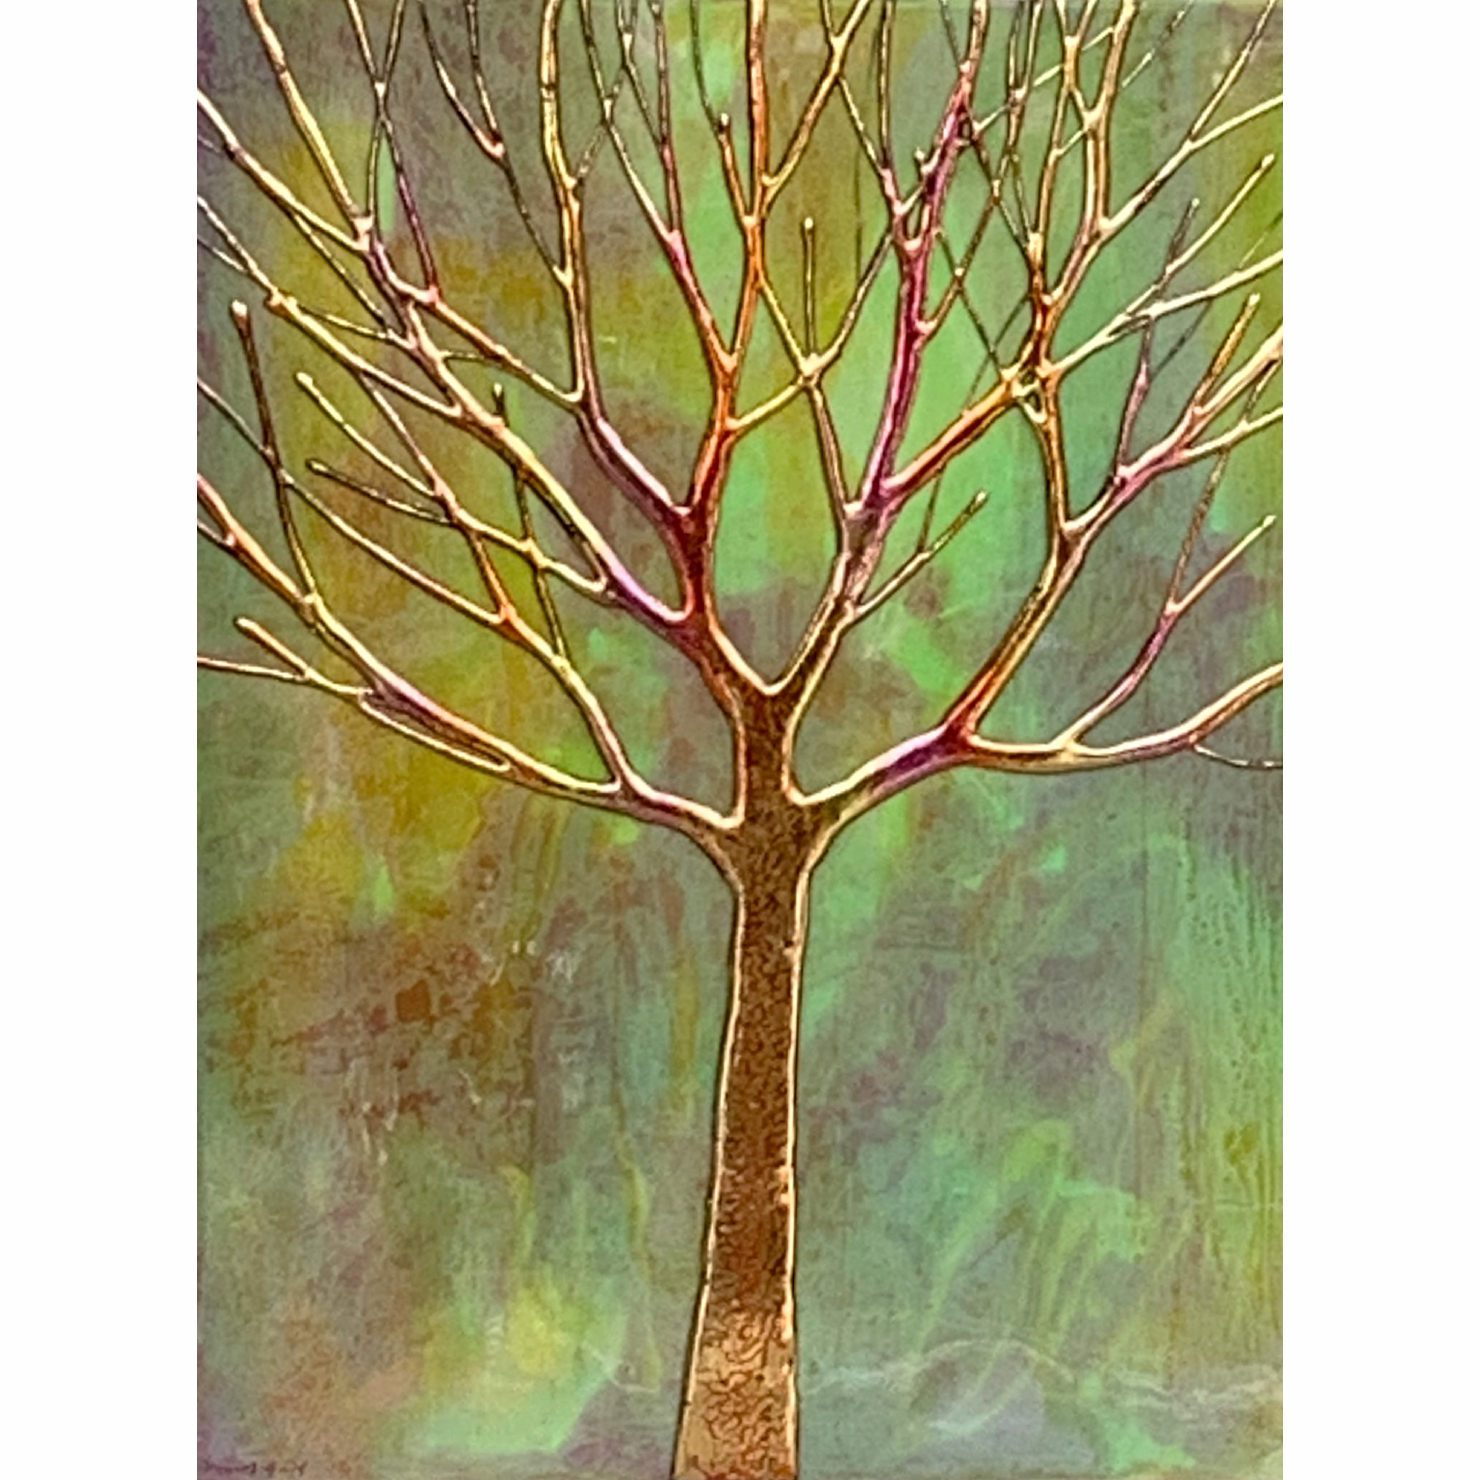 Liberté, mixed media tree painting by Sarah Moffat at Effusion Art Gallery in Invermere, BC.